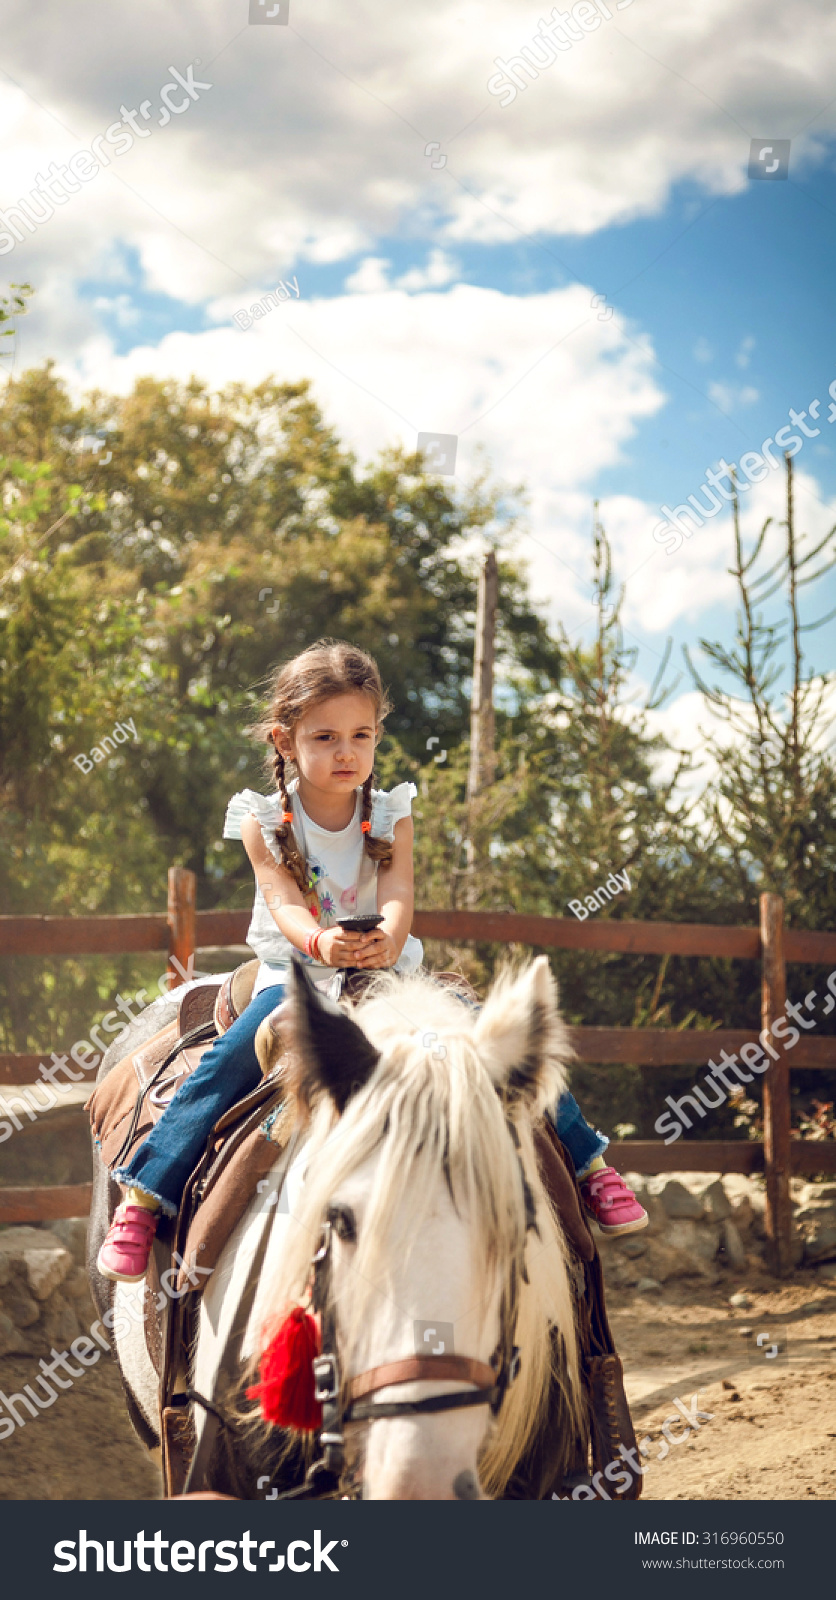 baby riding horse